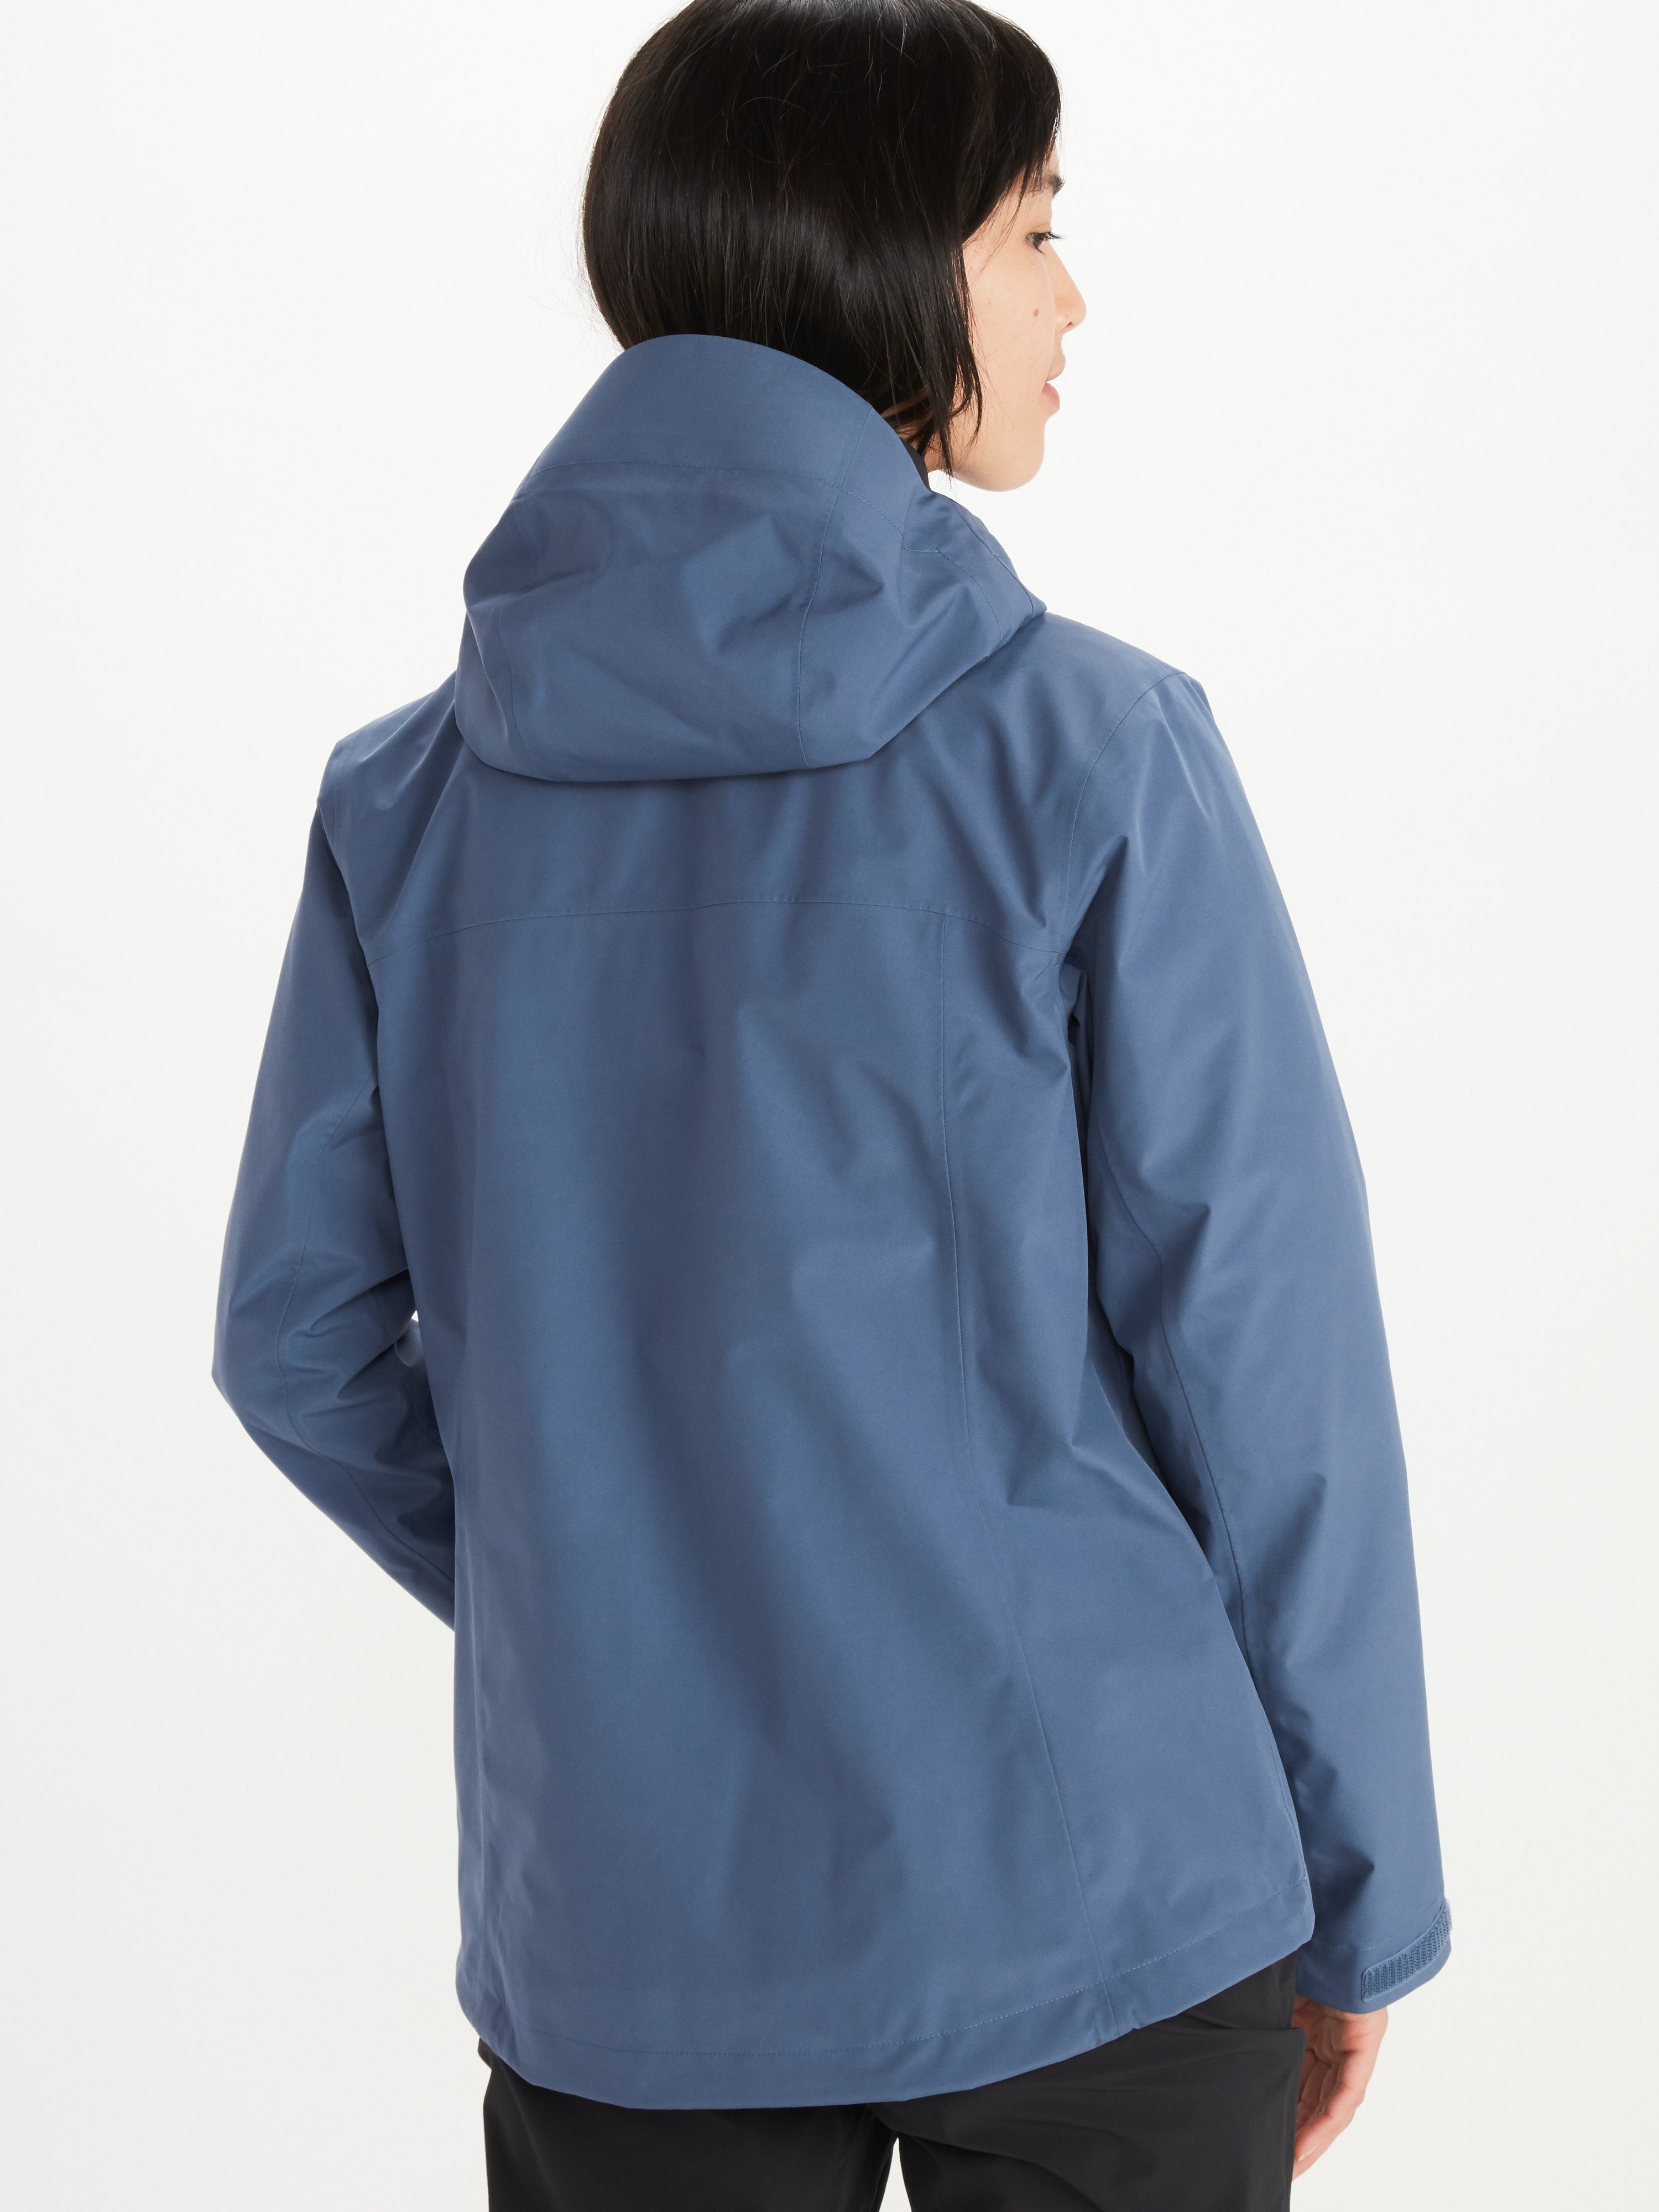 Marmot Women's Minimalist Pro GORE-TEX Jacket - Storm